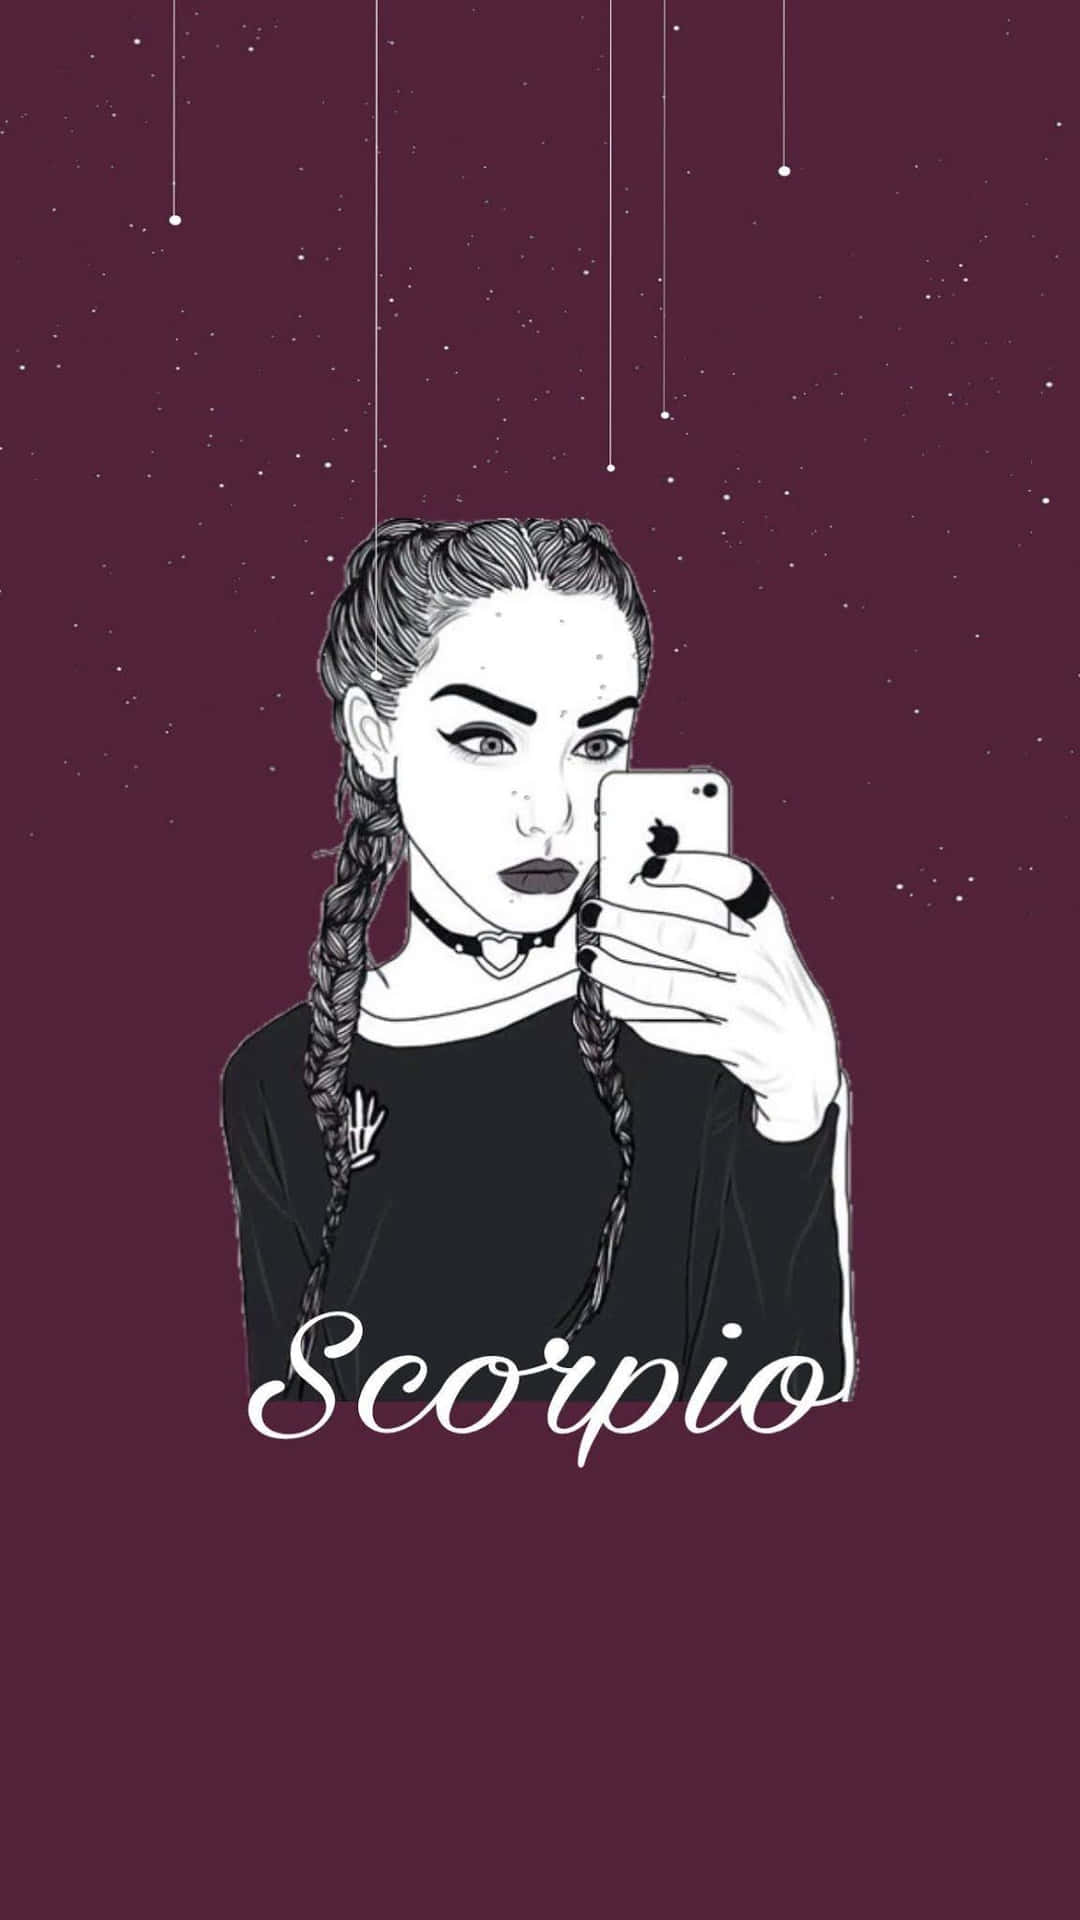 Scorpiohintergrundbild - Scorpio Hintergrundbild Wallpaper